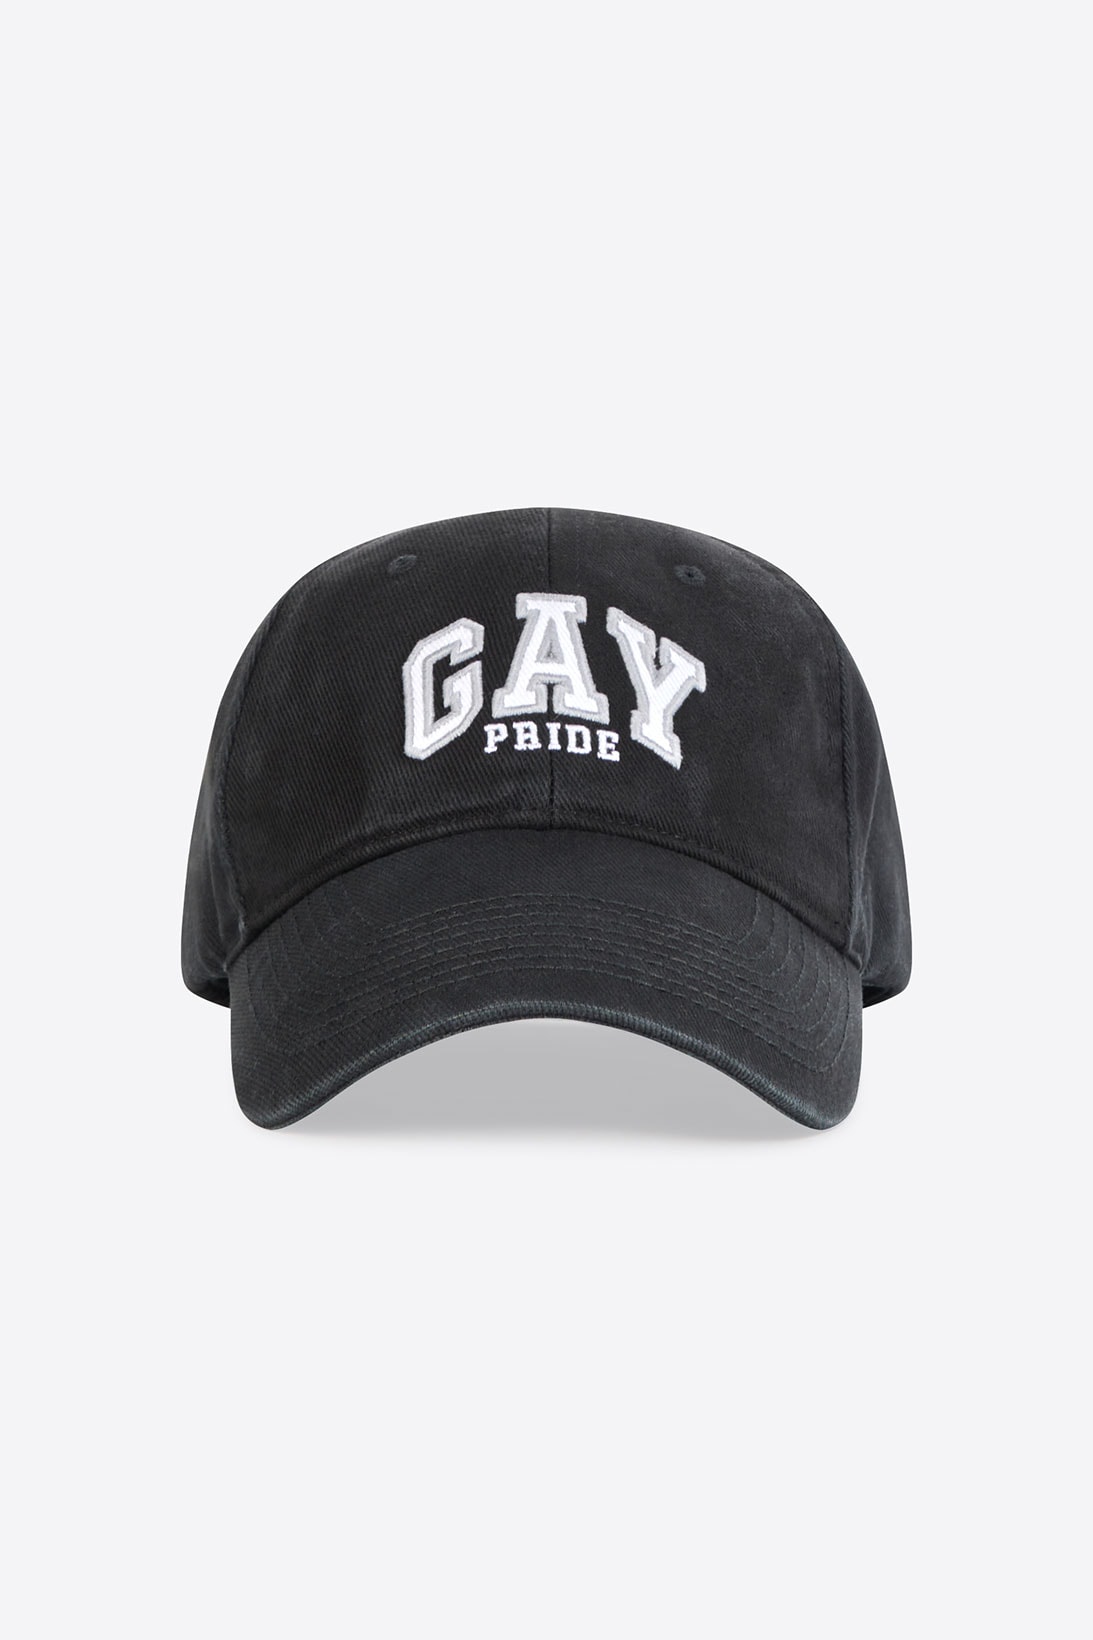 balenciaga pre-fall 2021 collection pride month capsule cap hat